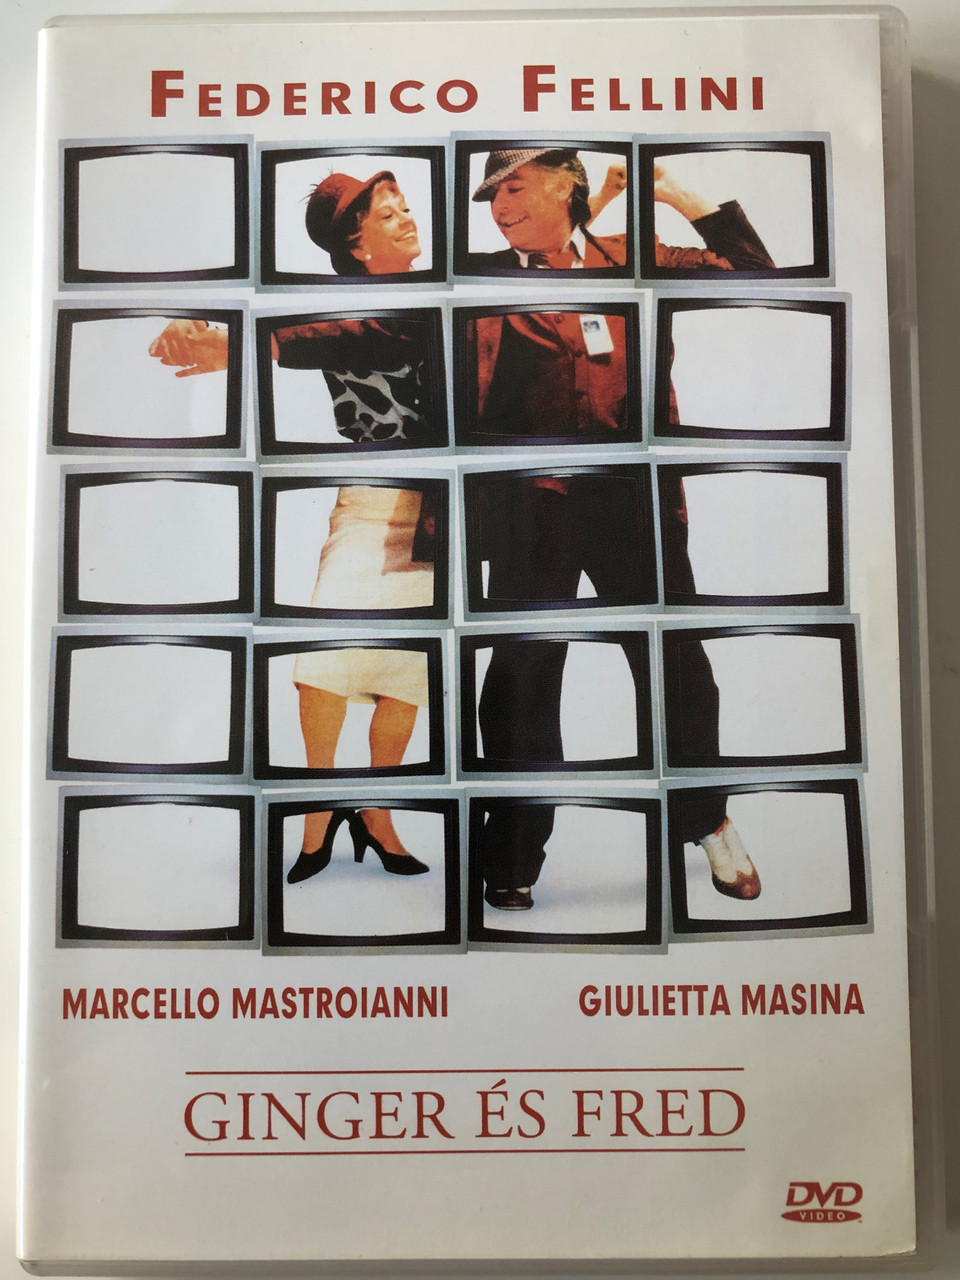 Ginger & Fred DVD 1986 Ginger és Fred / Directed by Federico Fellini /  Starring: Marcello Mastroianni, Giulietta Masina - bibleinmylanguage